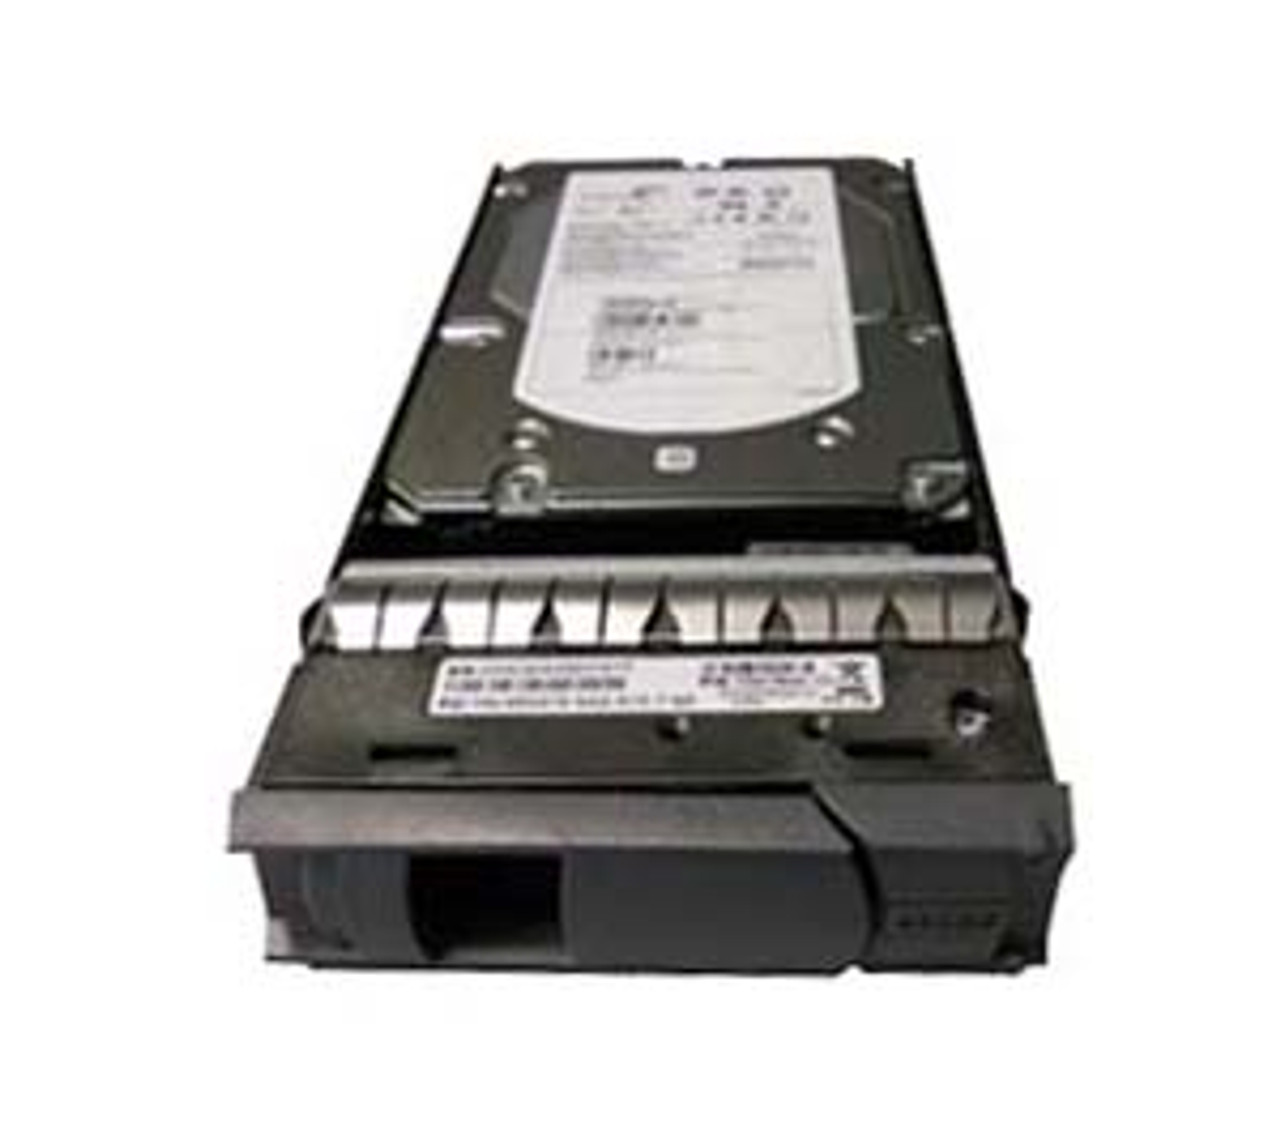 00AJ132 IBM 250GB 7200RPM SATA 6Gbps Nearline Hot Swap 2.5-inch Internal Hard Drive